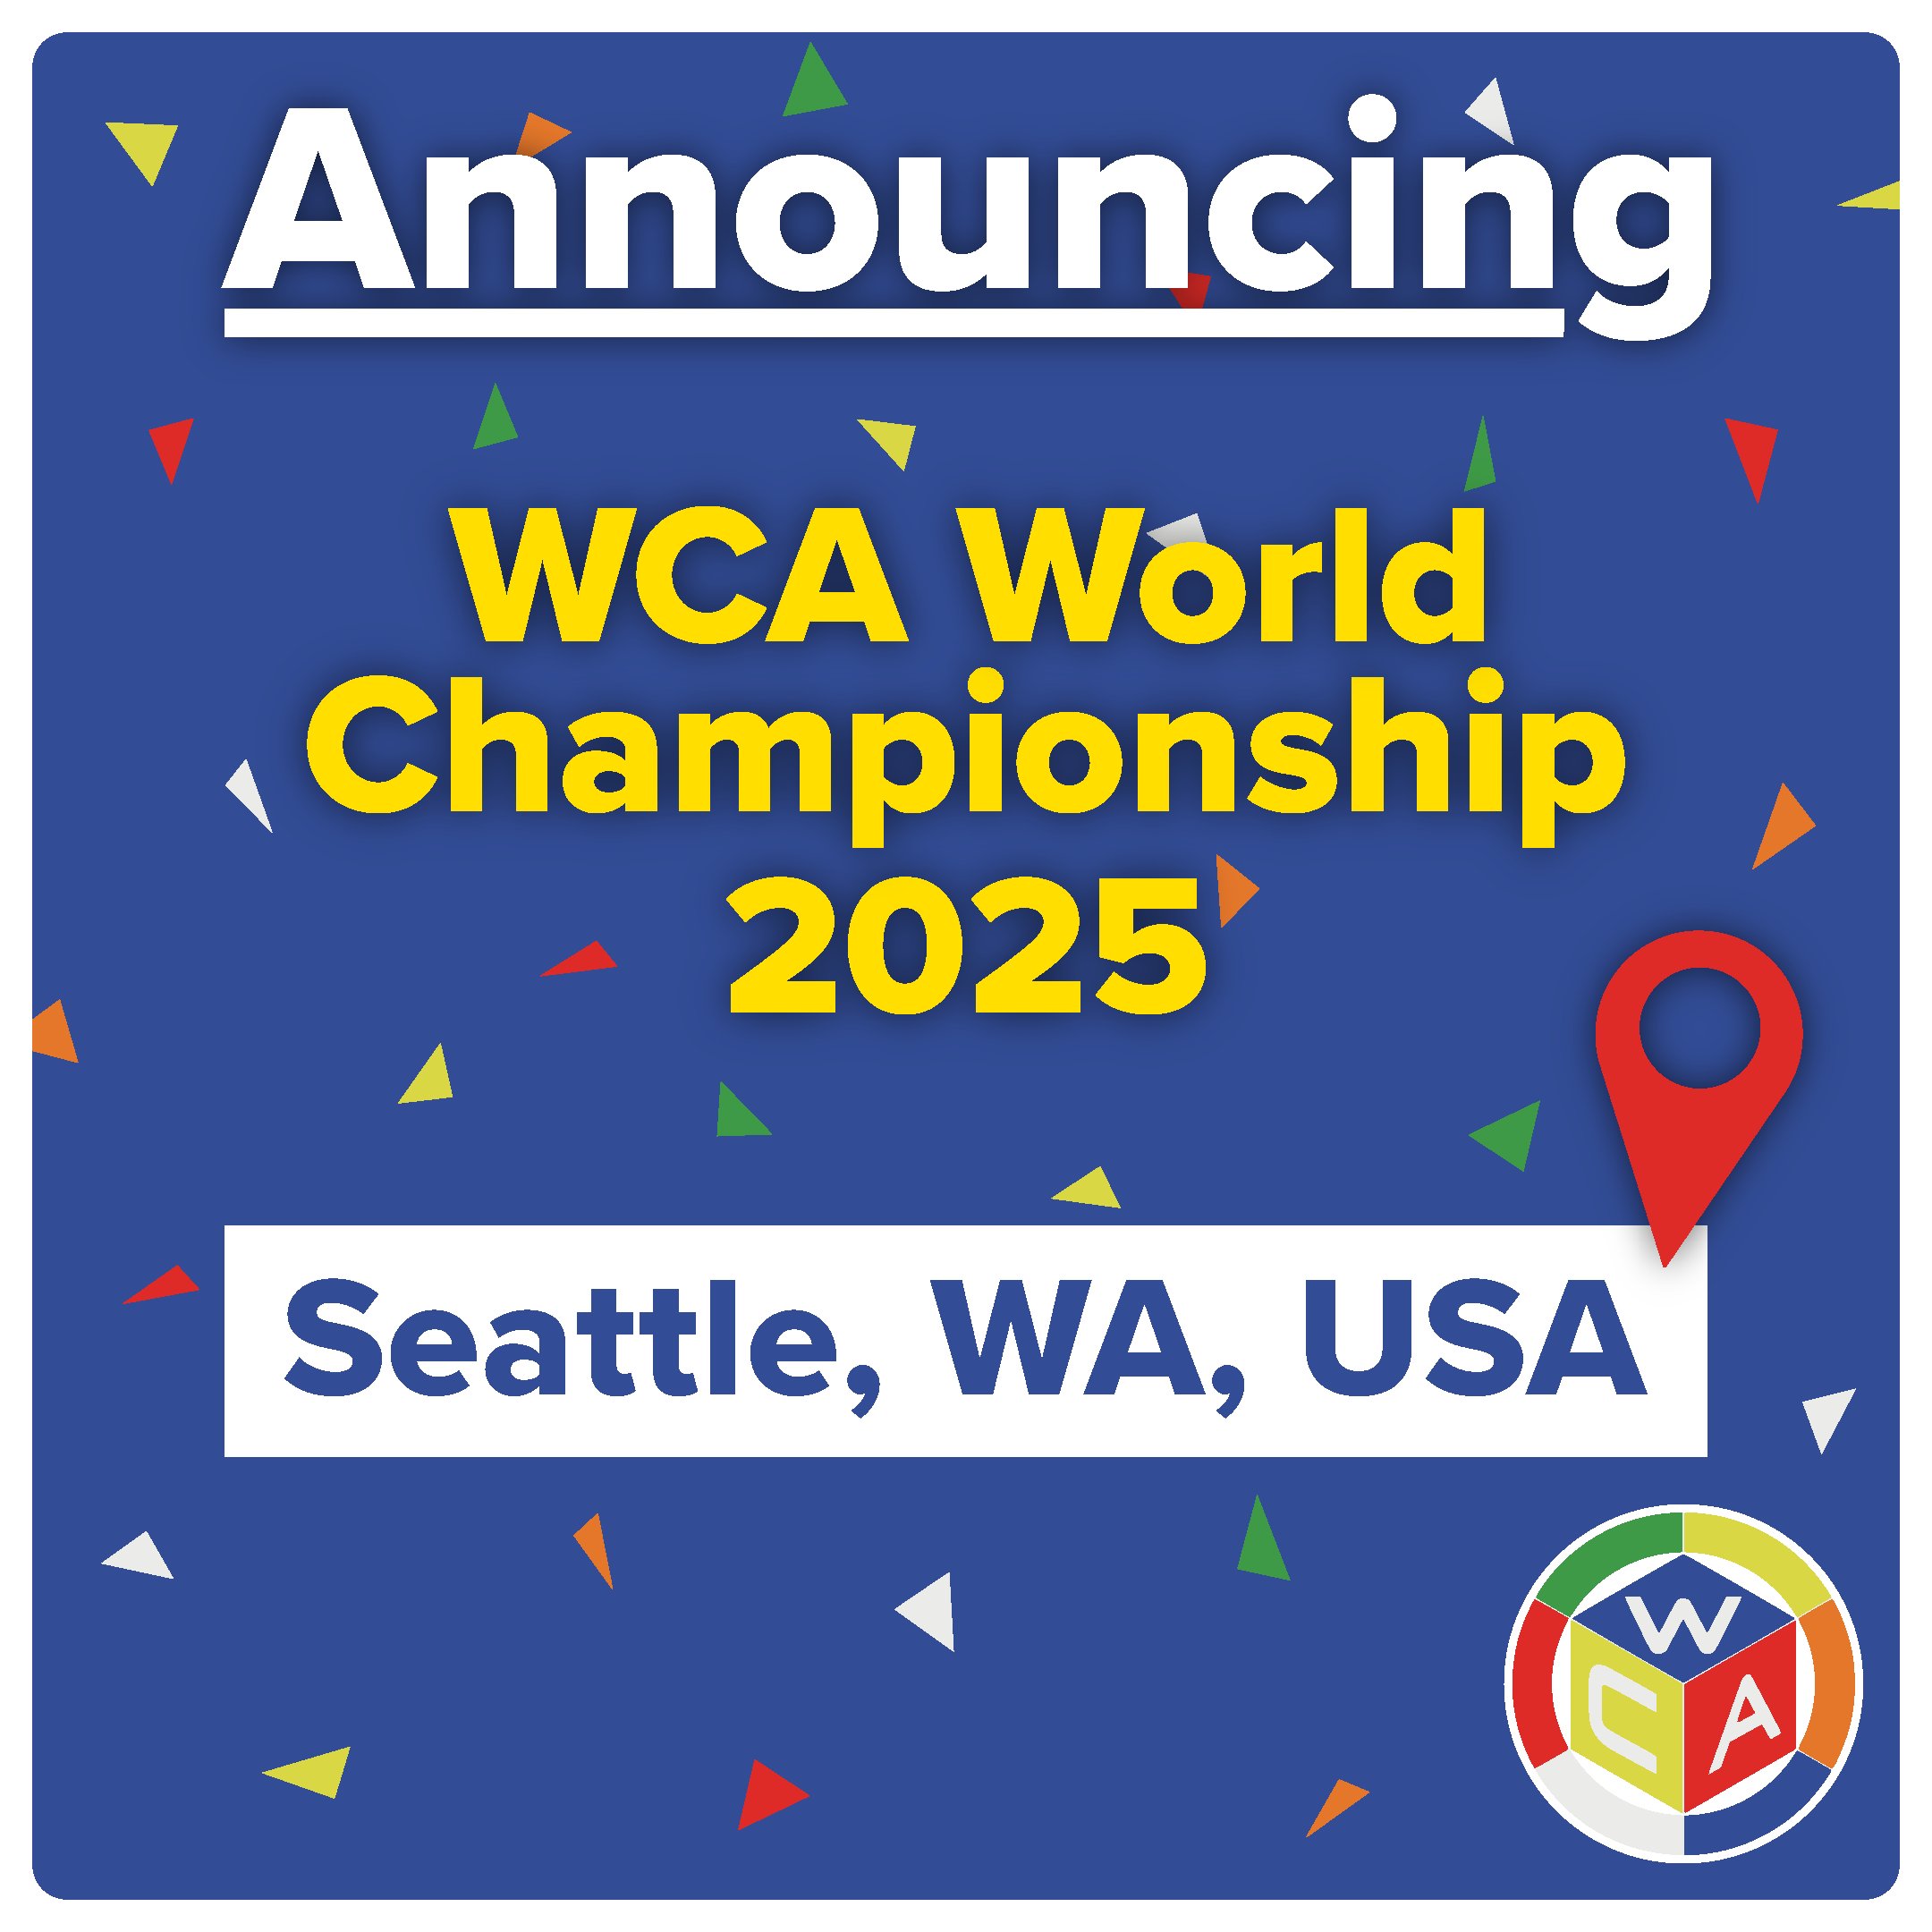 Rubik's WCA World Championship 2023